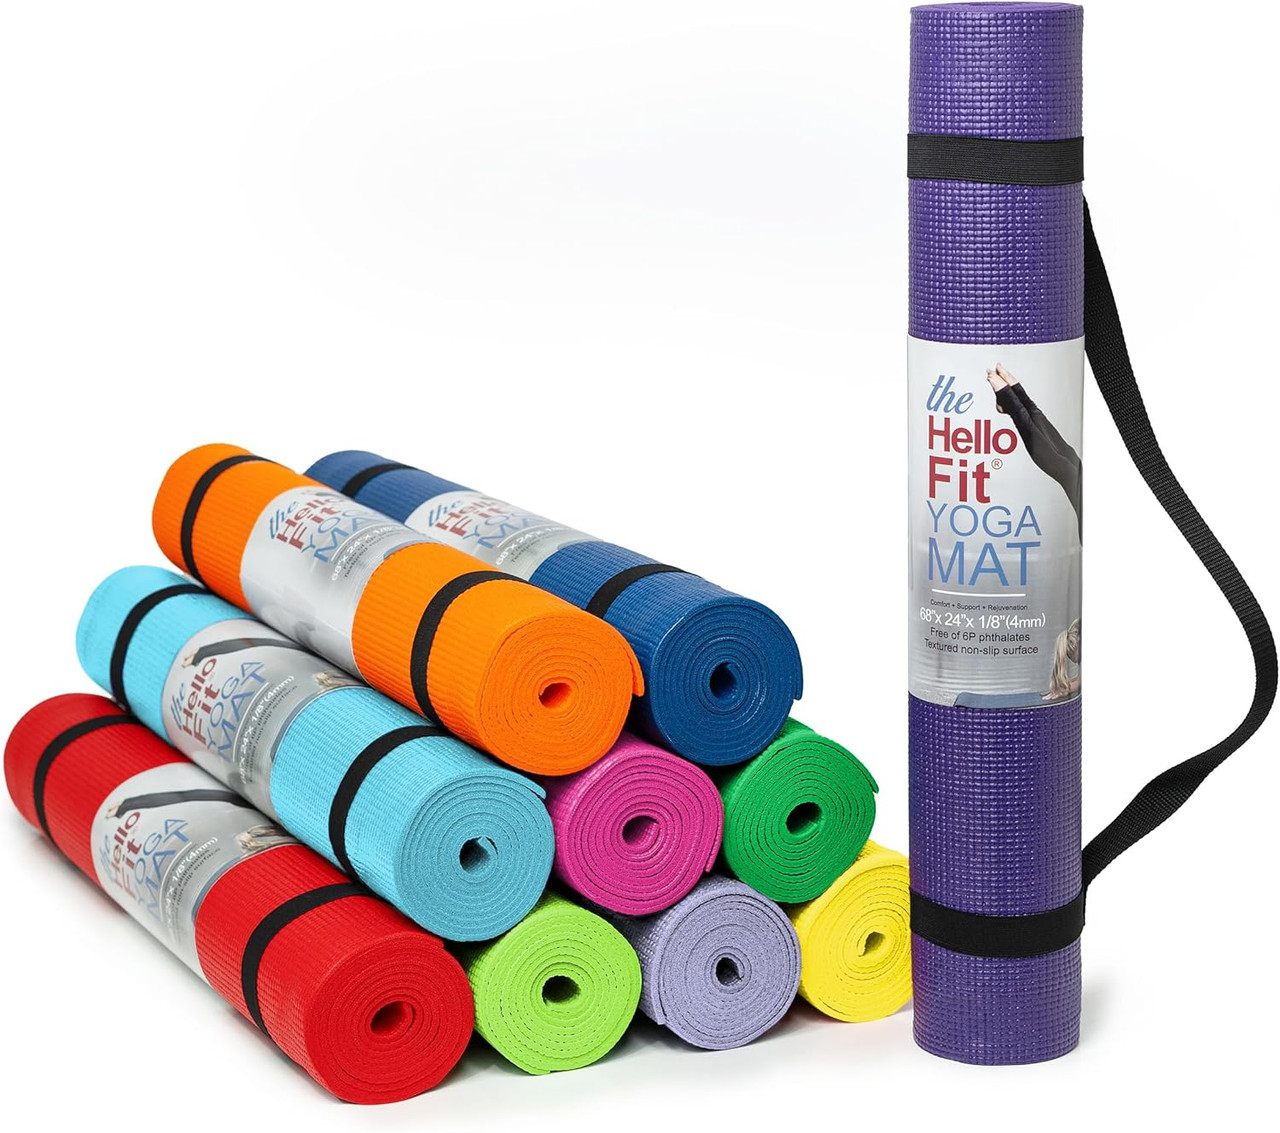 Hello Fit Yoga Mats - 10 Pack (68 x 24 x 4mm)